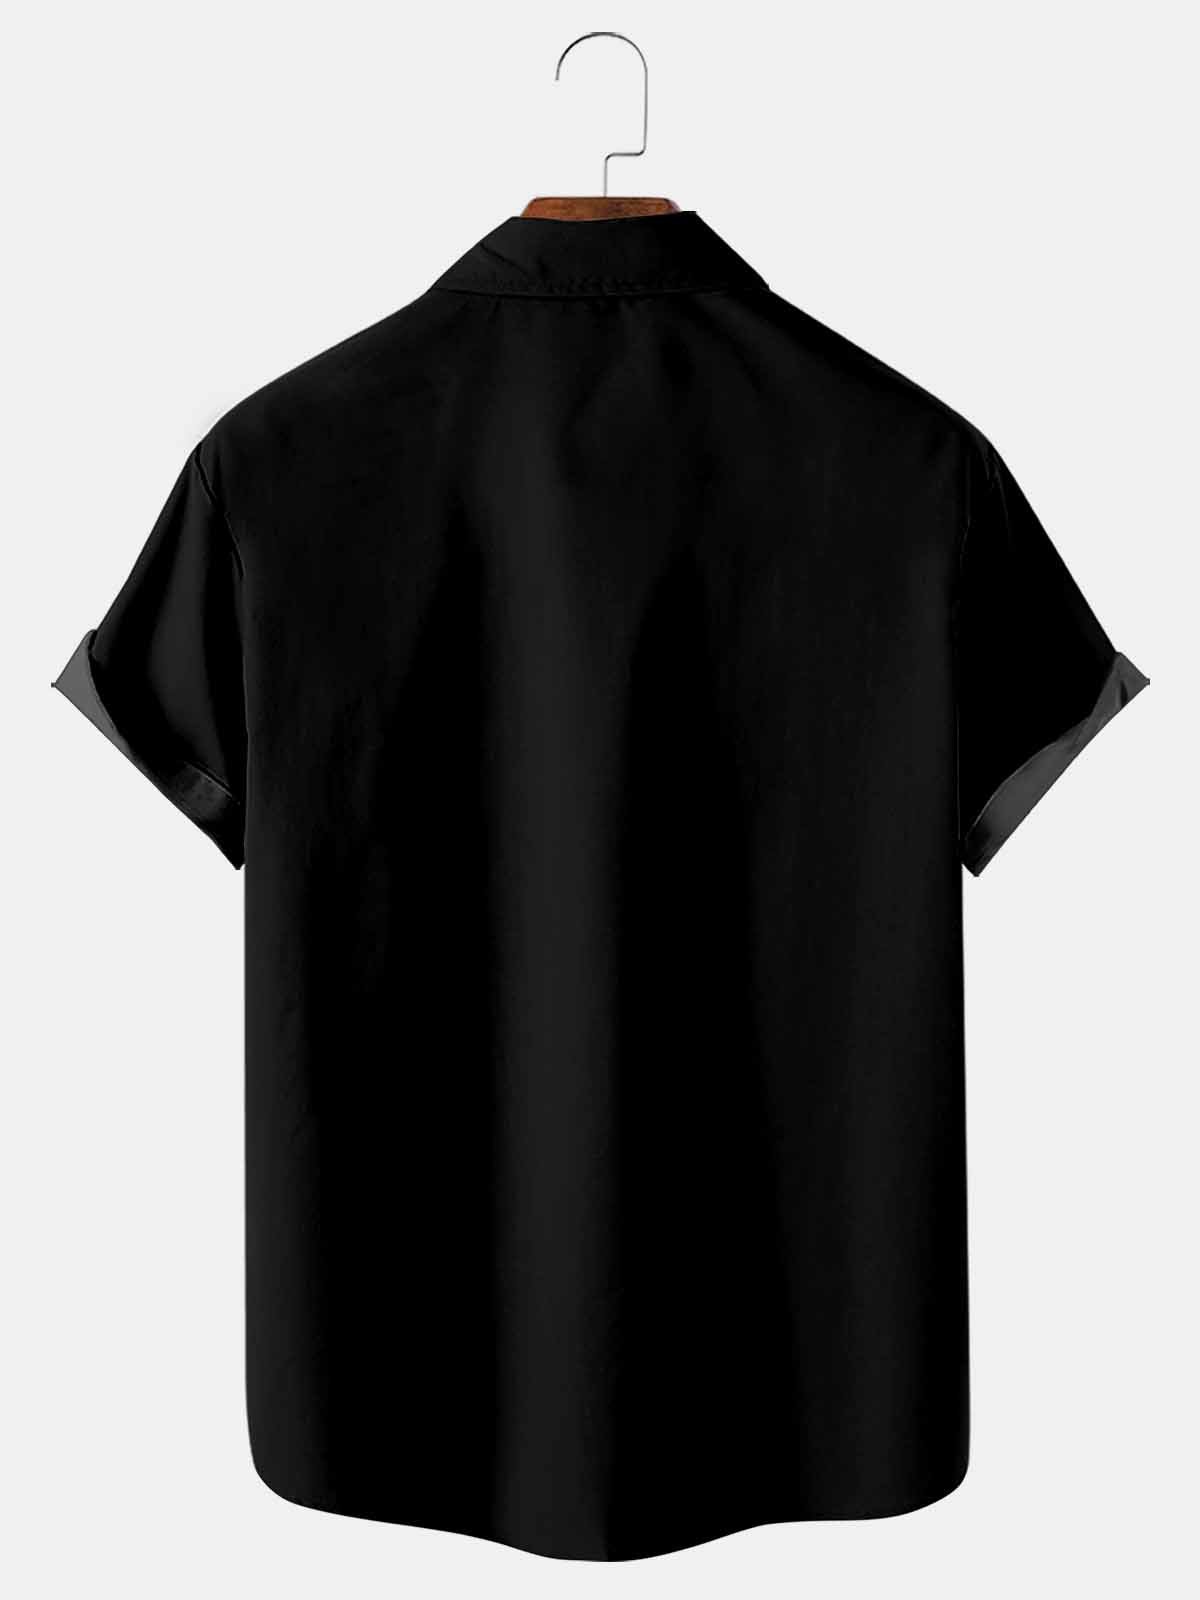 Royaura Black Music Instrument Print Breast Pocket Shirt Plus Size Shirt